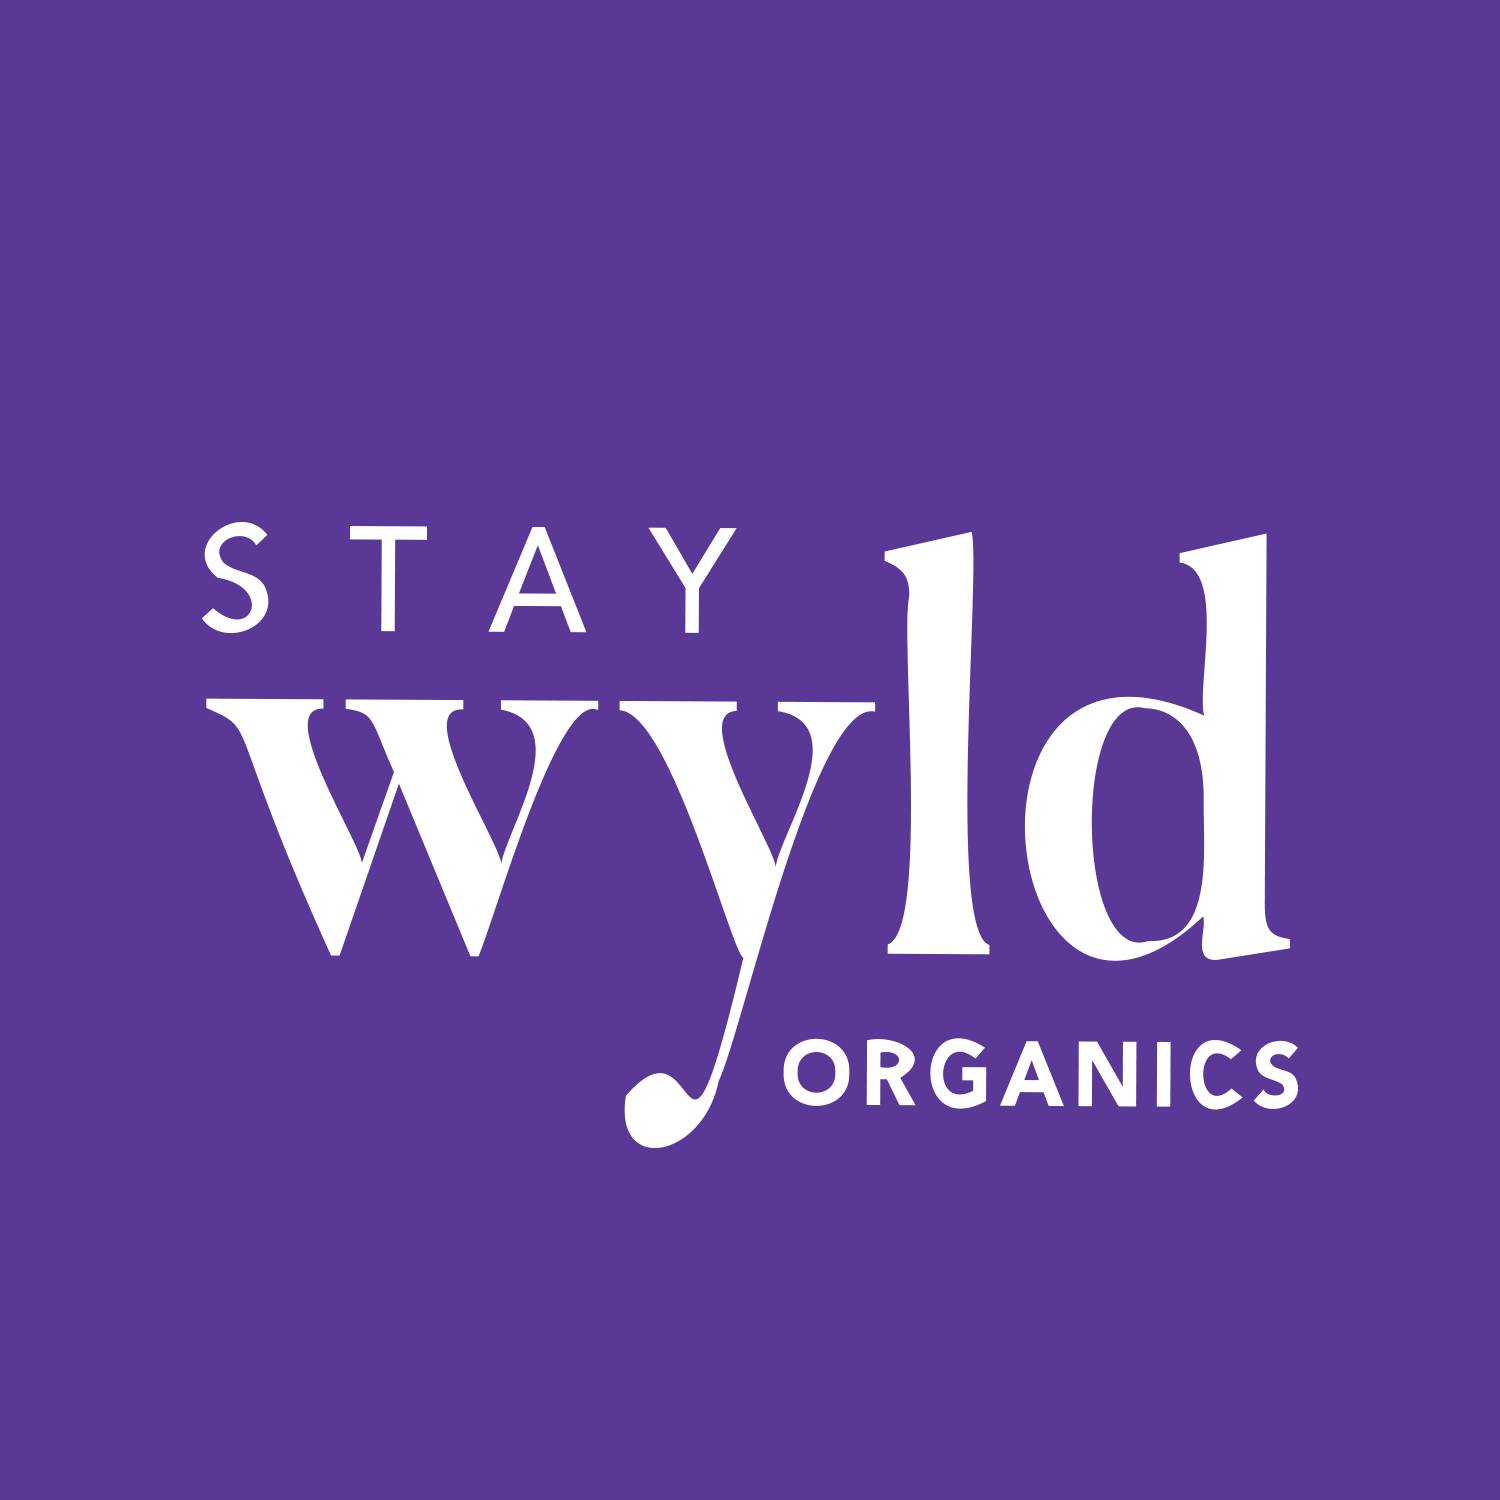 Stay Wyld logo 2